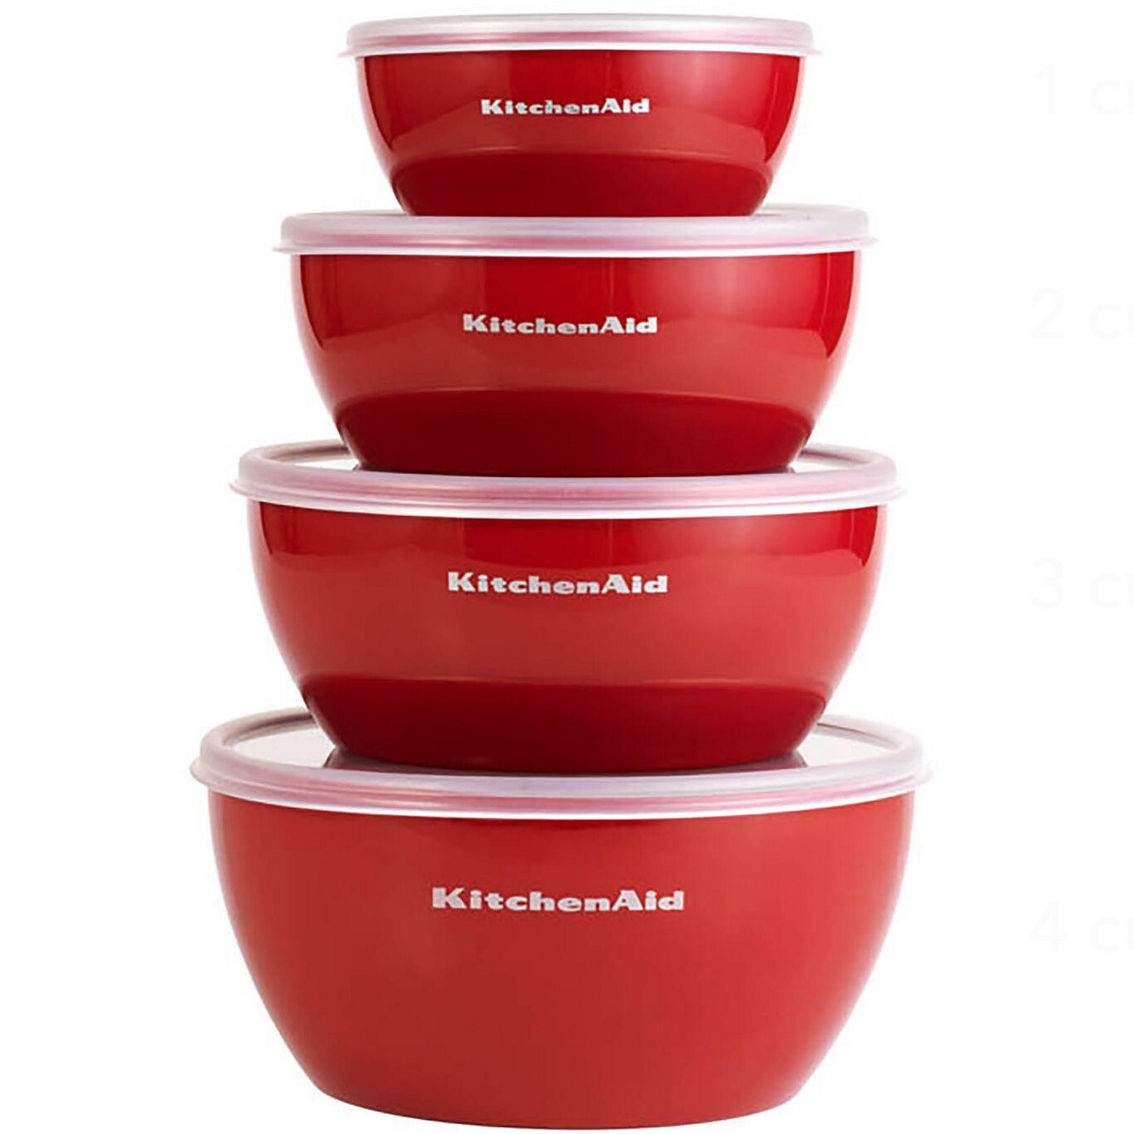 Kitchenaid Classic Prep Bowls 4 Pc. Set With Lids, Food Storage, Household